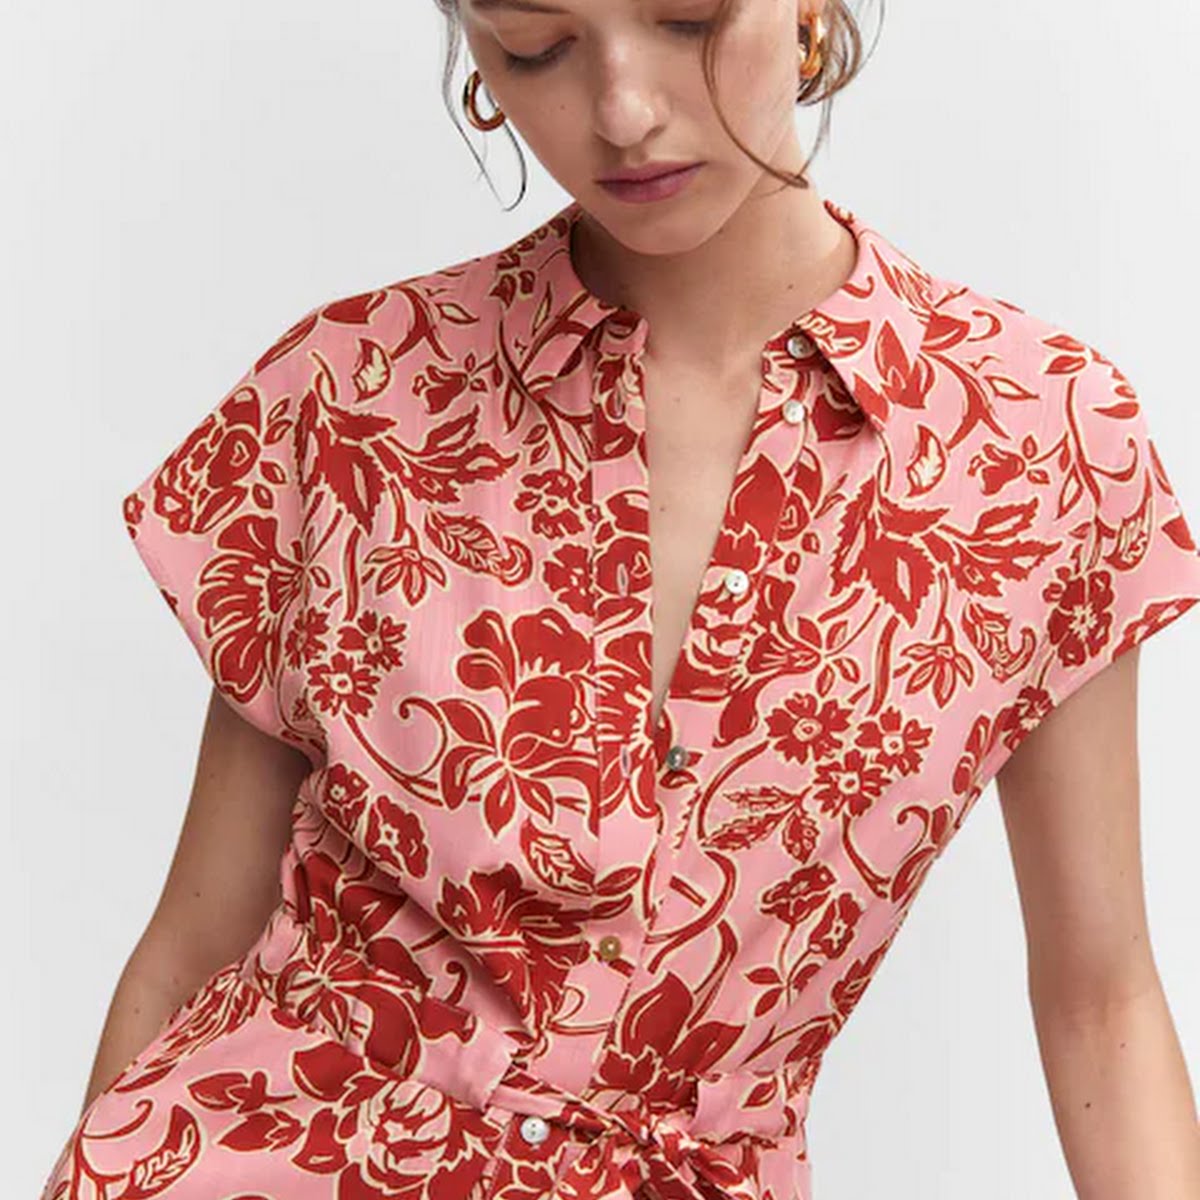 Floral-Print Jumpsuit with Tie, €39.99